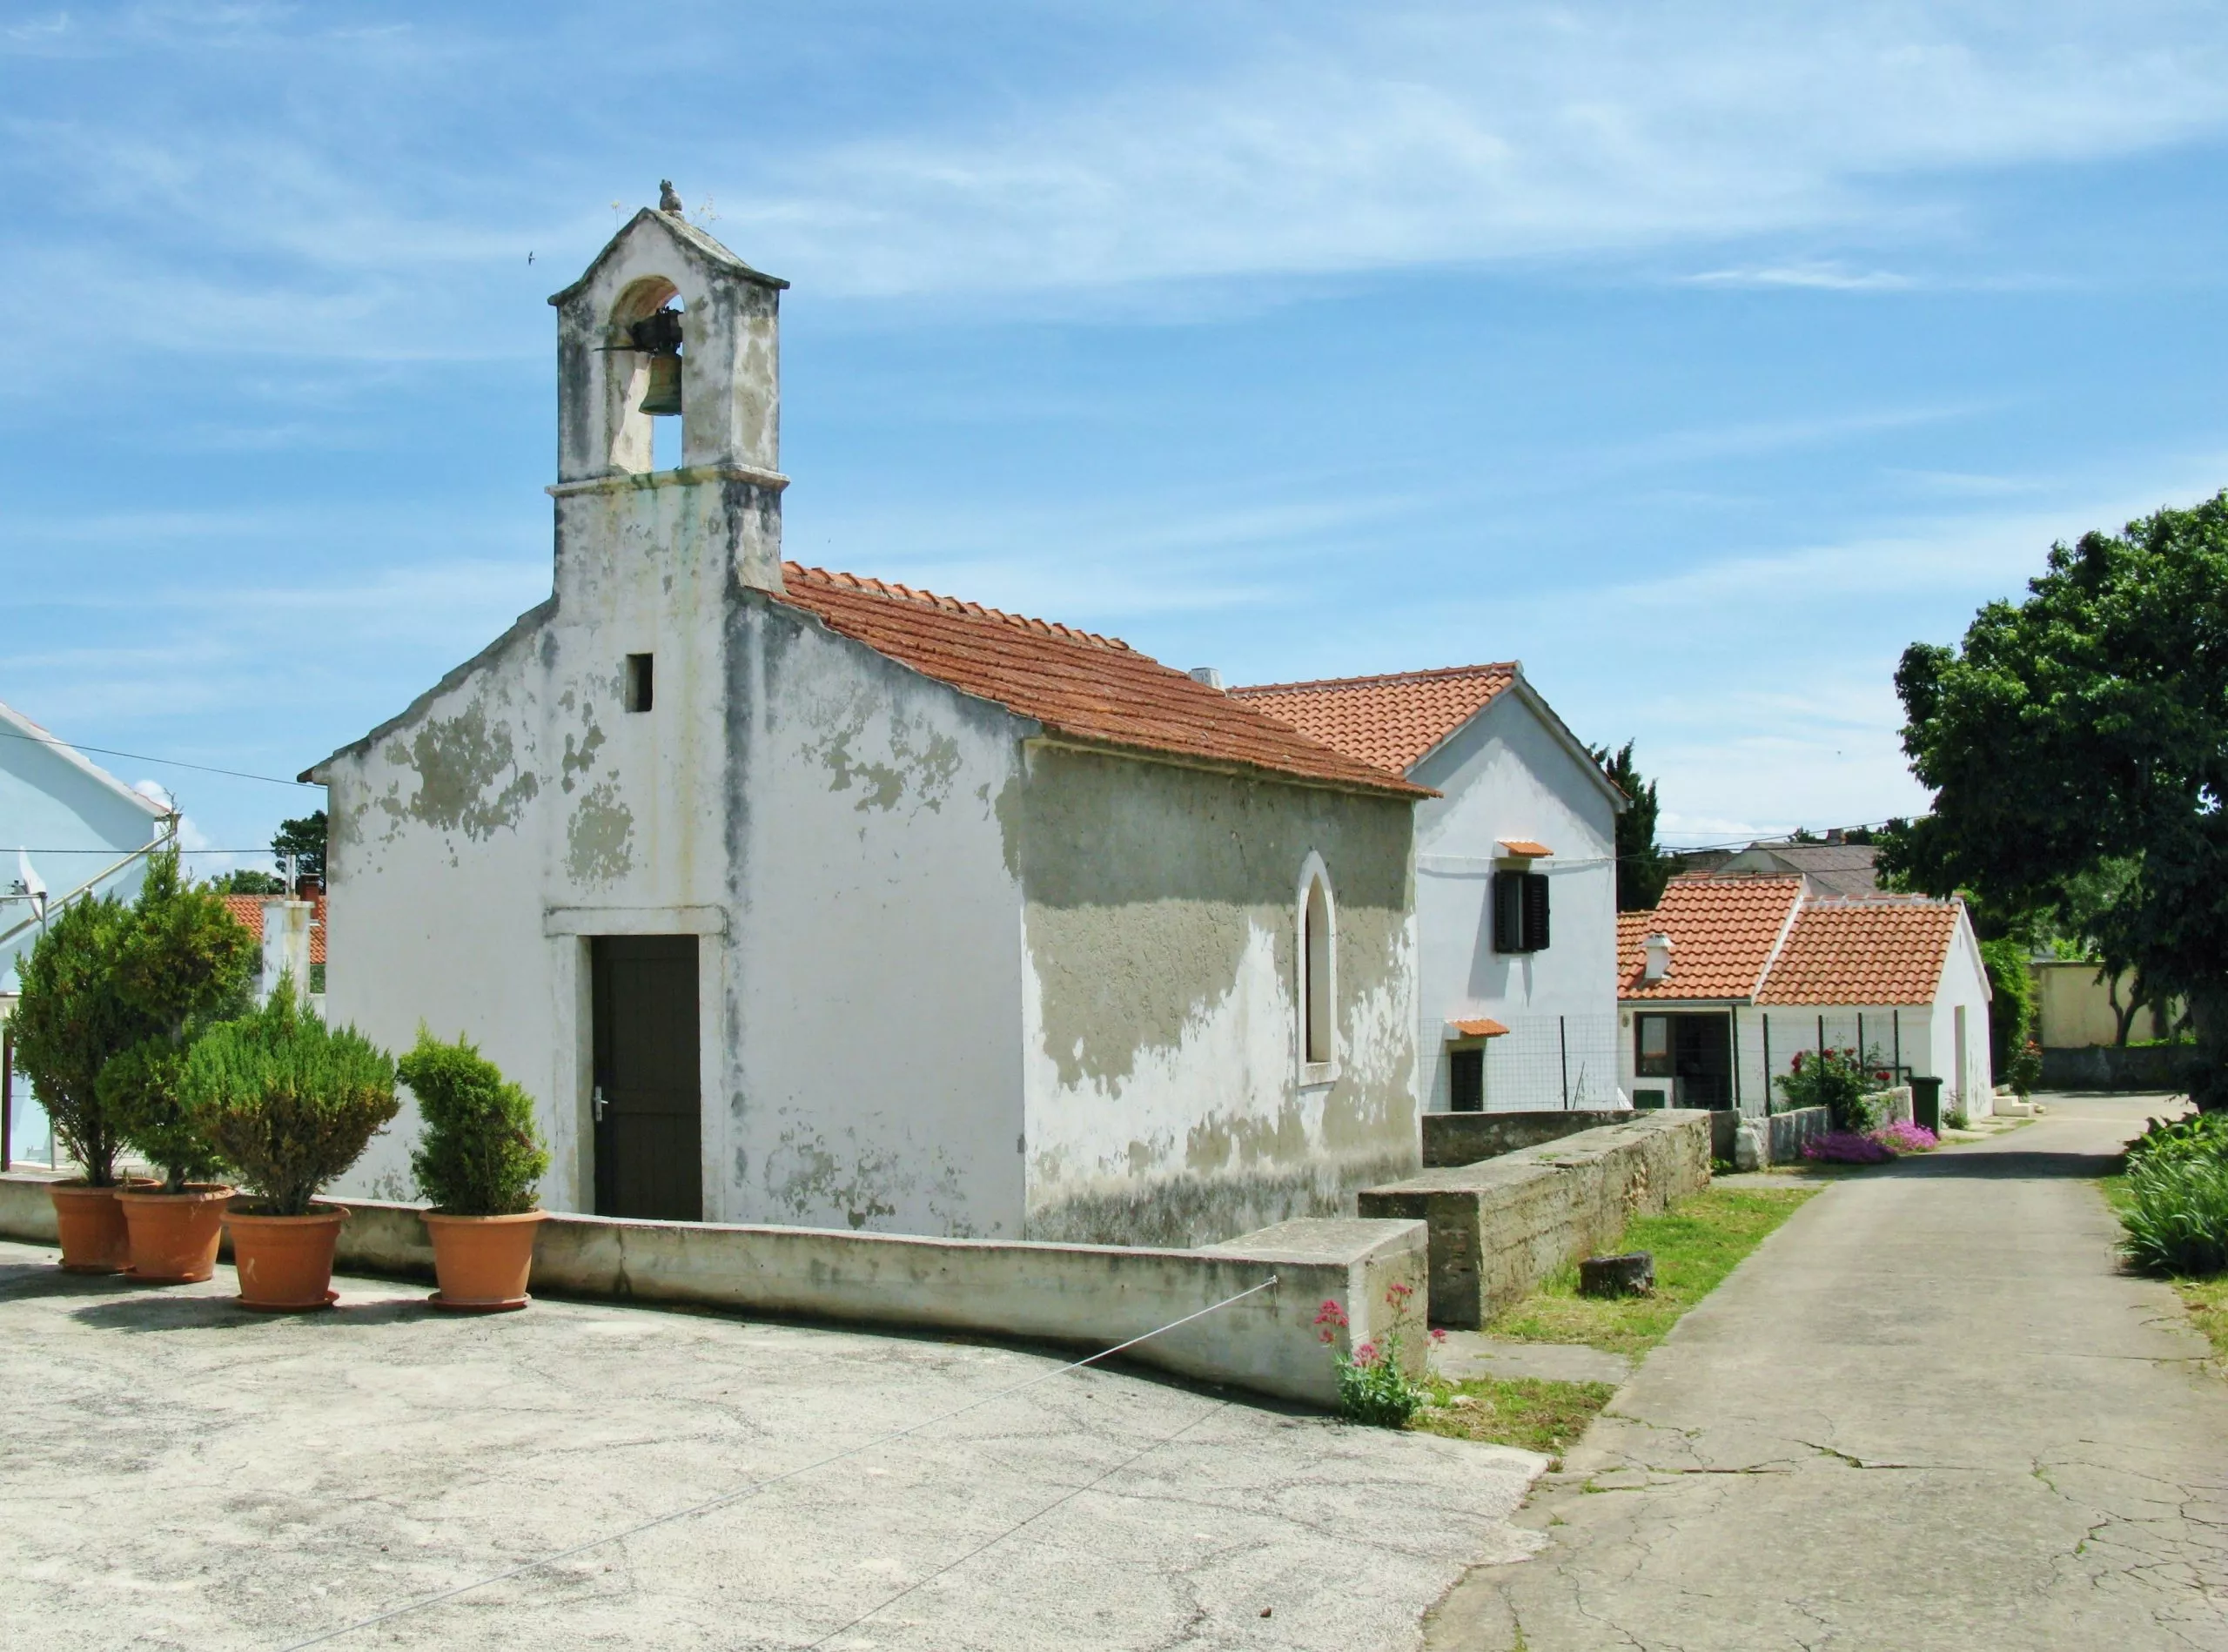 The church of Molat at the Croatian island Molat